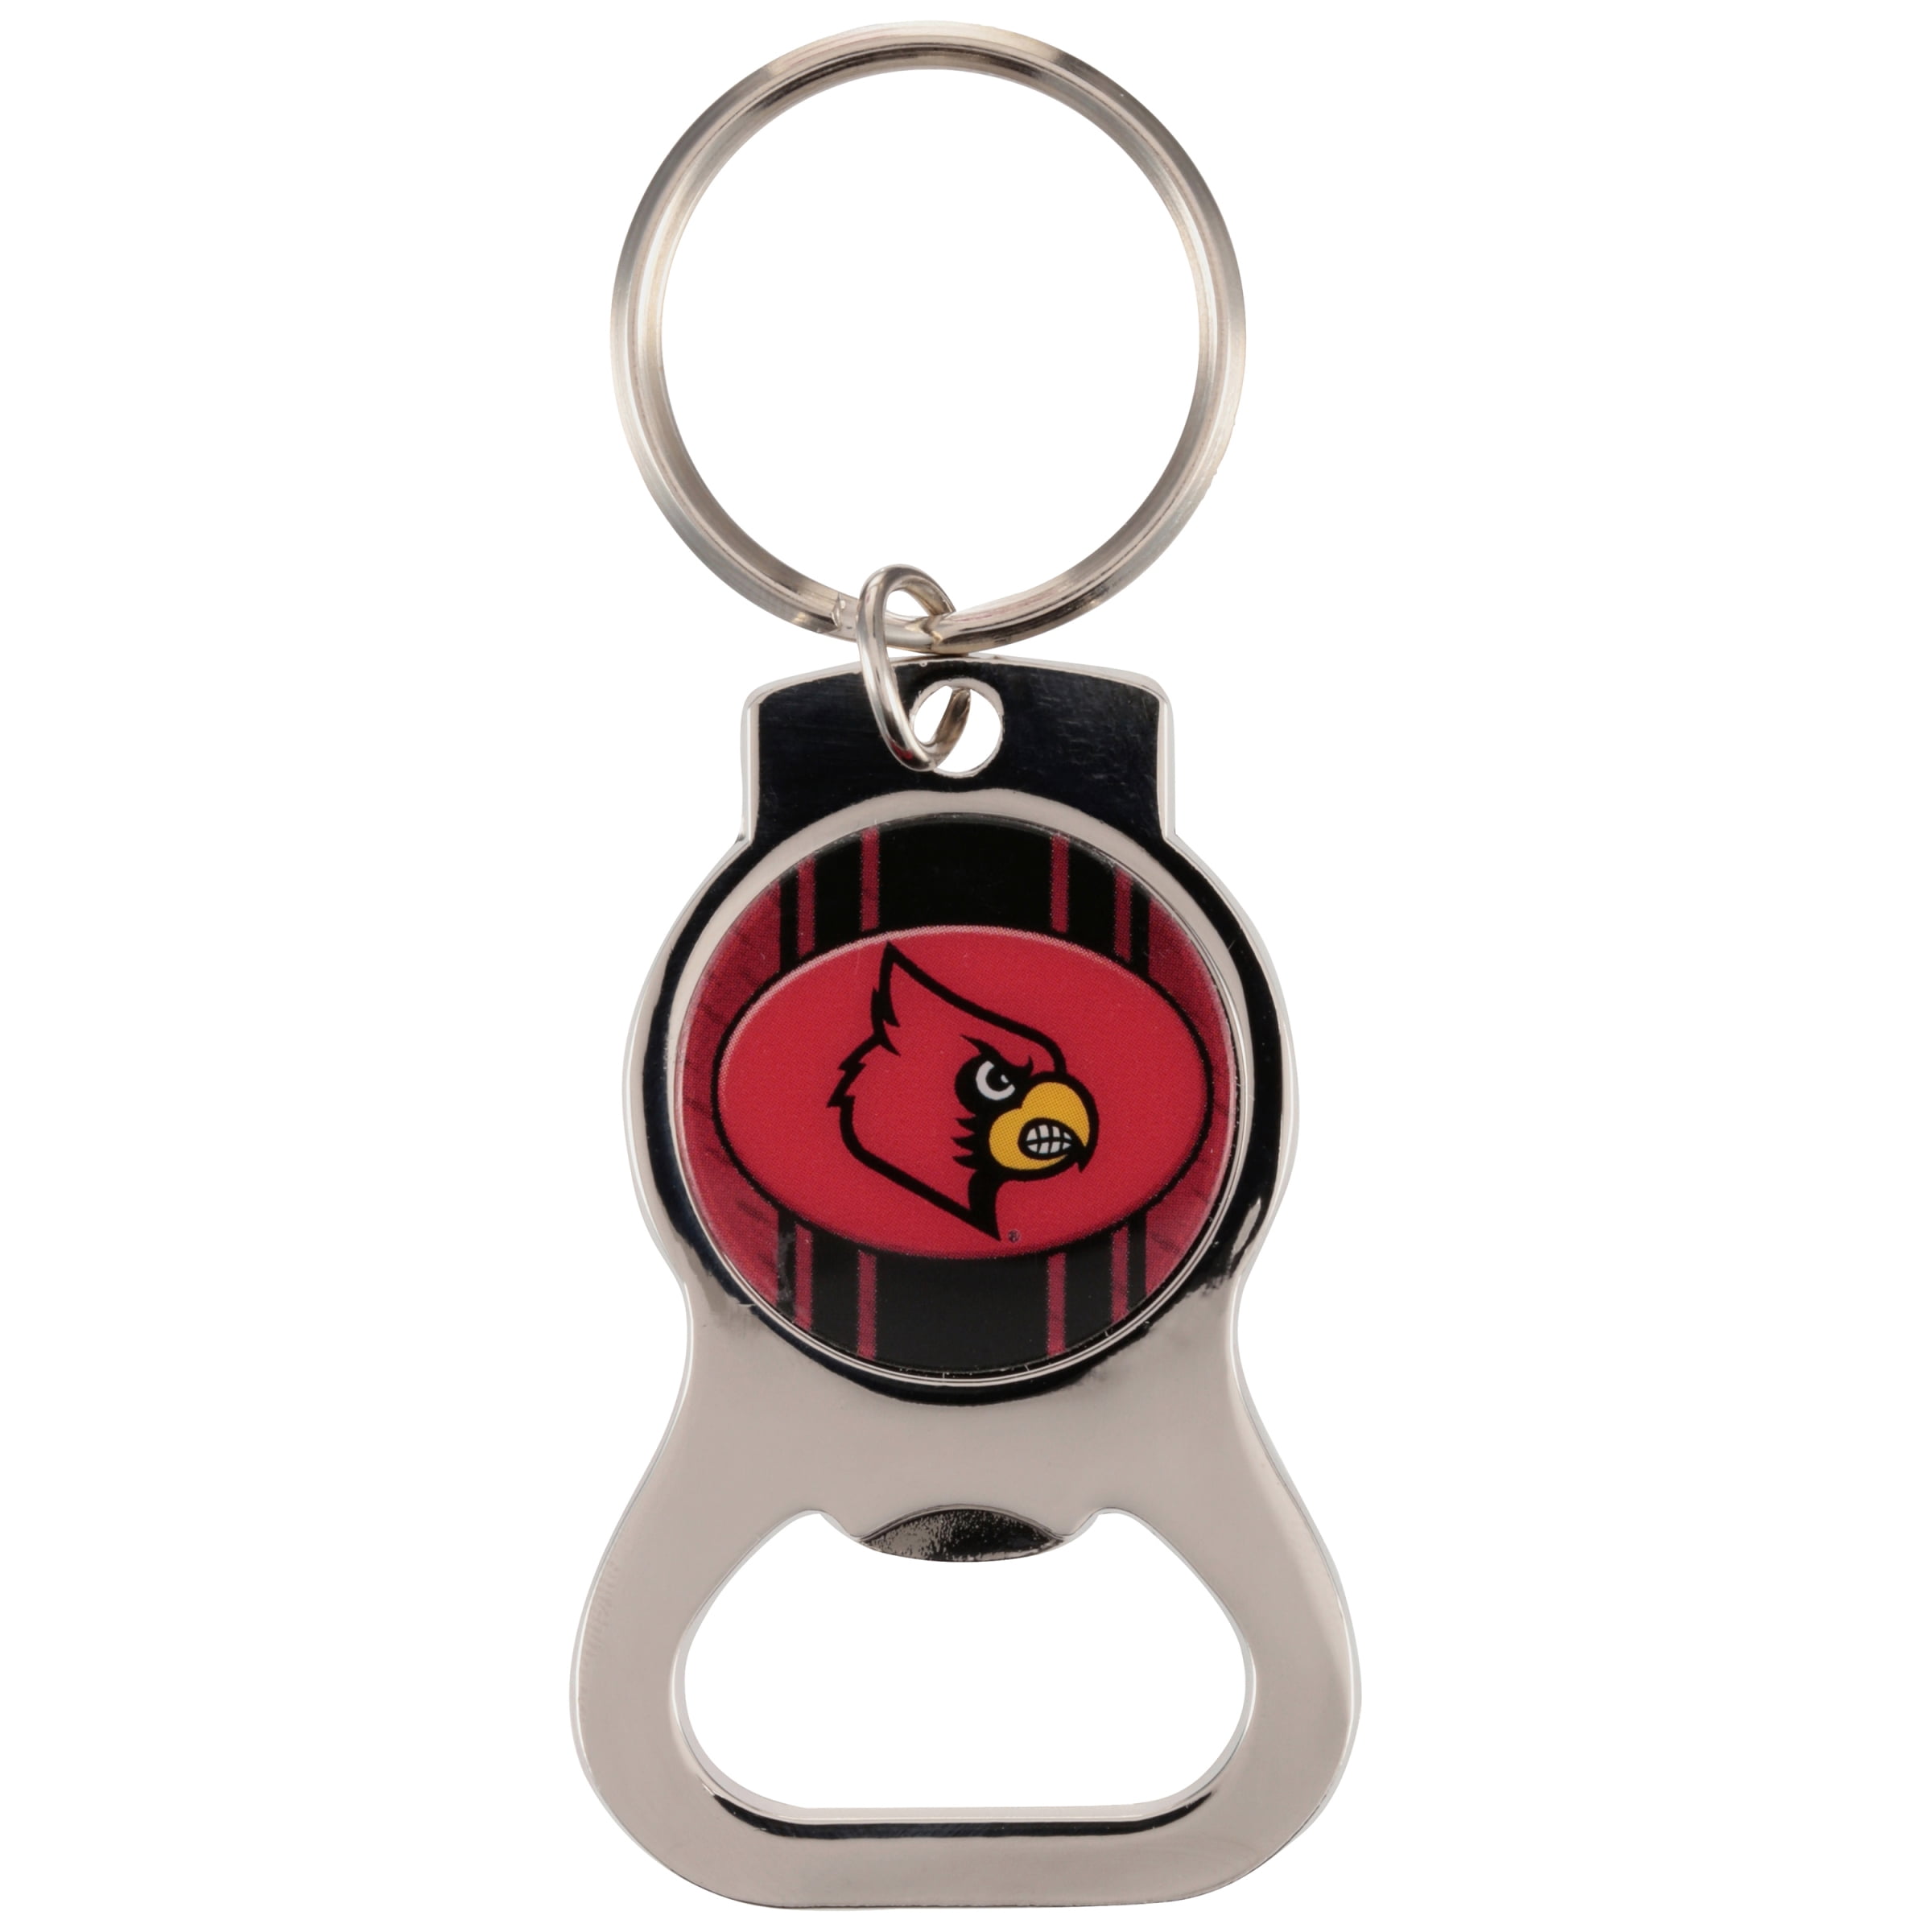 Louisville Cardinals - Key Chain Bottle Opener